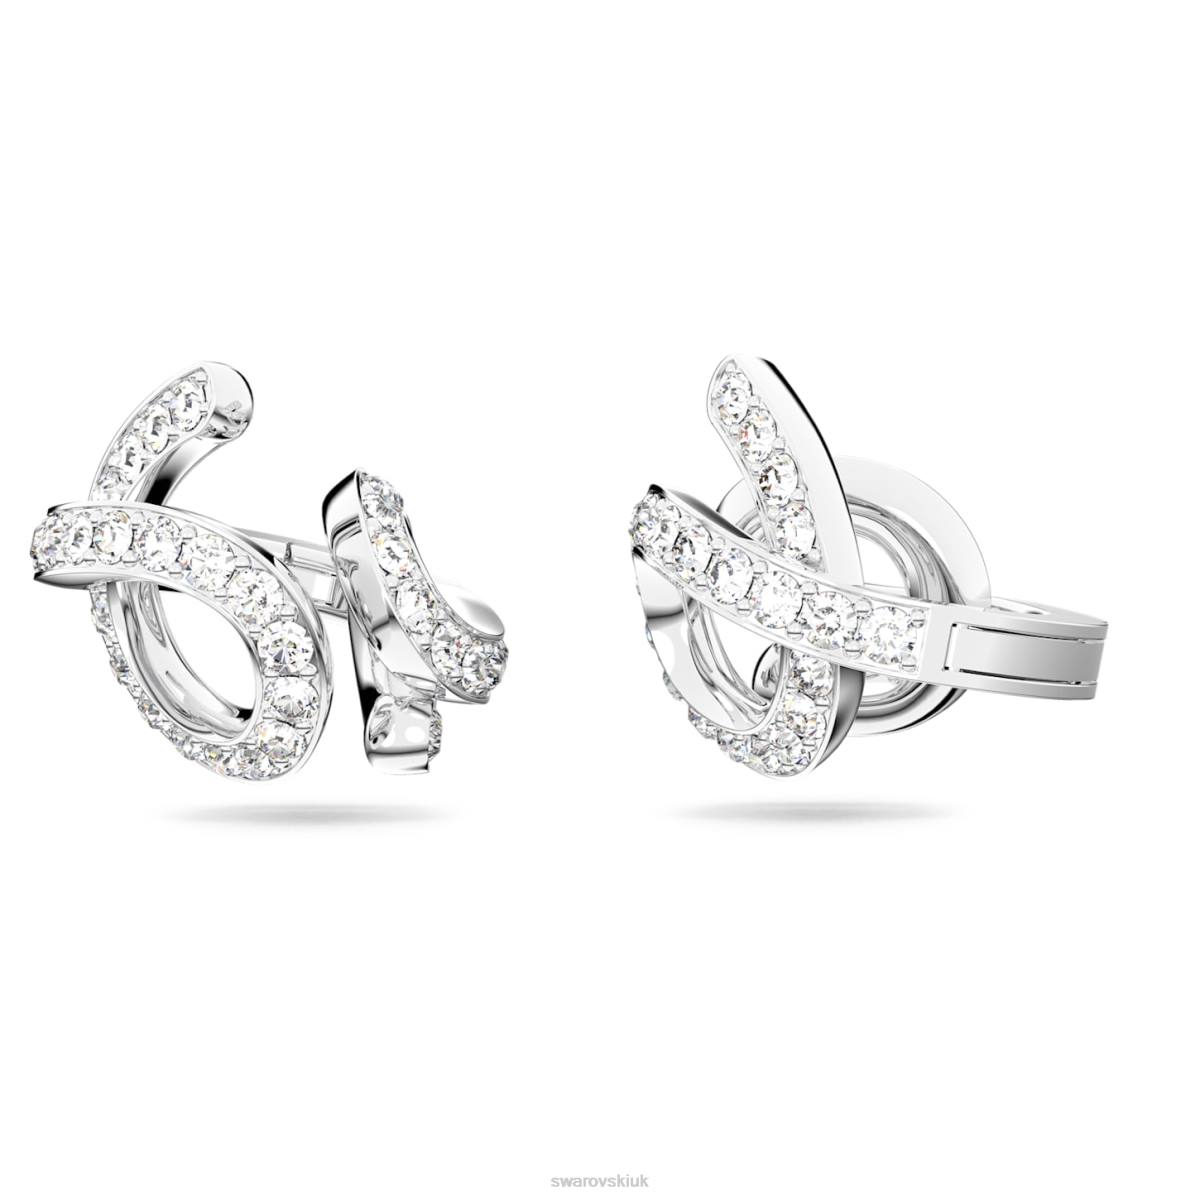 Jewelry Swarovski Fluenta clip earrings Reignited crystals, White, Rhodium plated 48JX958